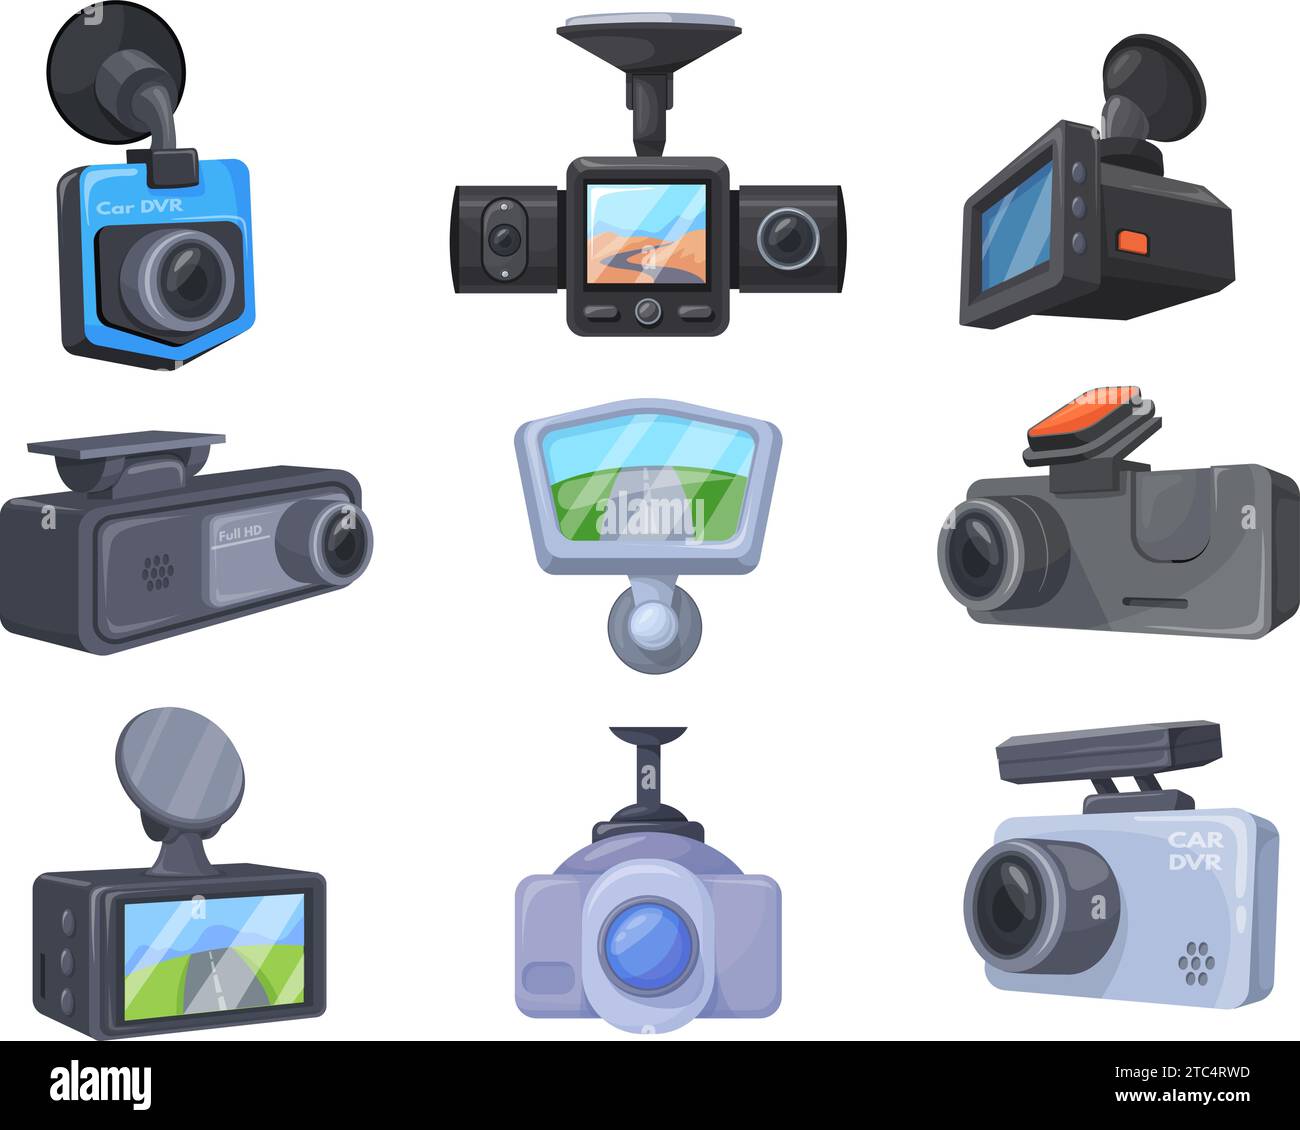 https://c8.alamy.com/comp/2TC4RWD/dvr-dash-cameras-video-recorder-system-for-driving-security-camera-mounting-on-car-window-dashcam-device-digital-technology-road-surveillance-set-cartoon-vector-illustration-of-camera-car-recorder-2TC4RWD.jpg